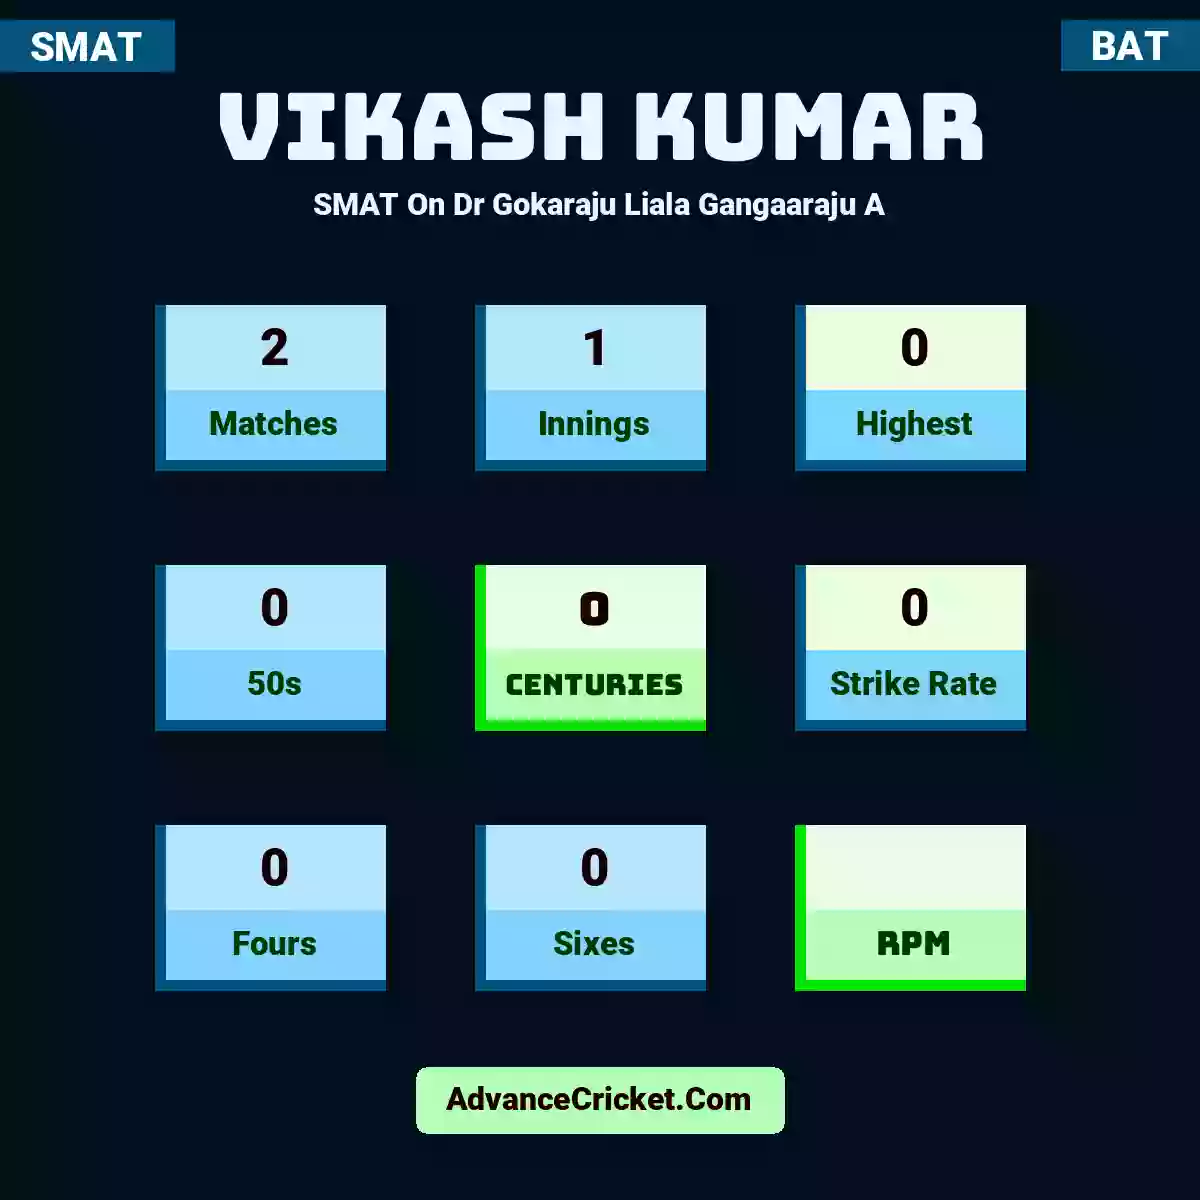 Vikash Kumar SMAT  On Dr Gokaraju Liala Gangaaraju A, Vikash Kumar played 2 matches, scored 0 runs as highest, 0 half-centuries, and 0 centuries, with a strike rate of 0. V.Kumar hit 0 fours and 0 sixes.